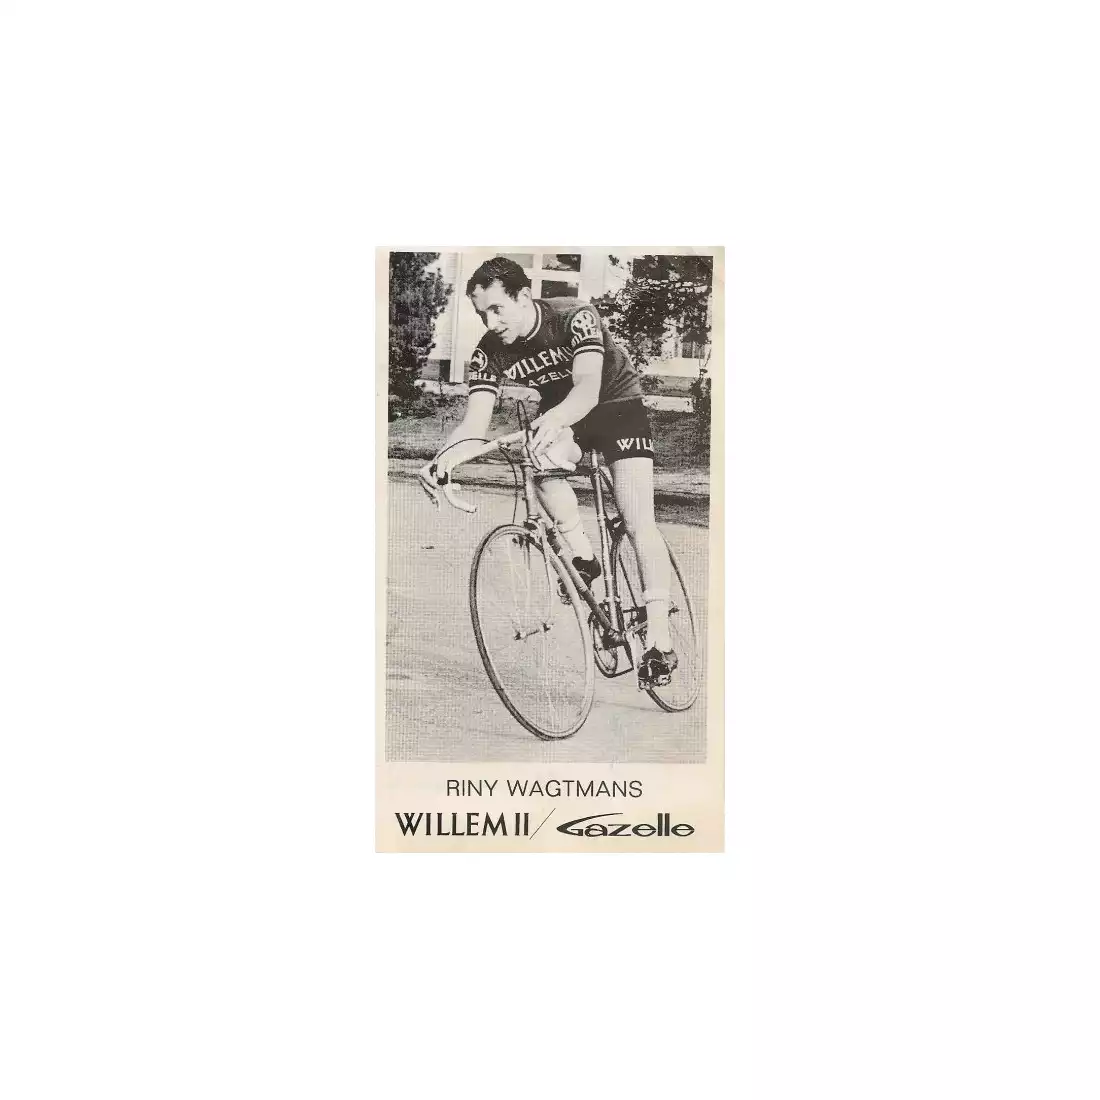 ROGELLI BIKE WILLEM II koszulka rowerowa 001.219, kolor: Niebieski